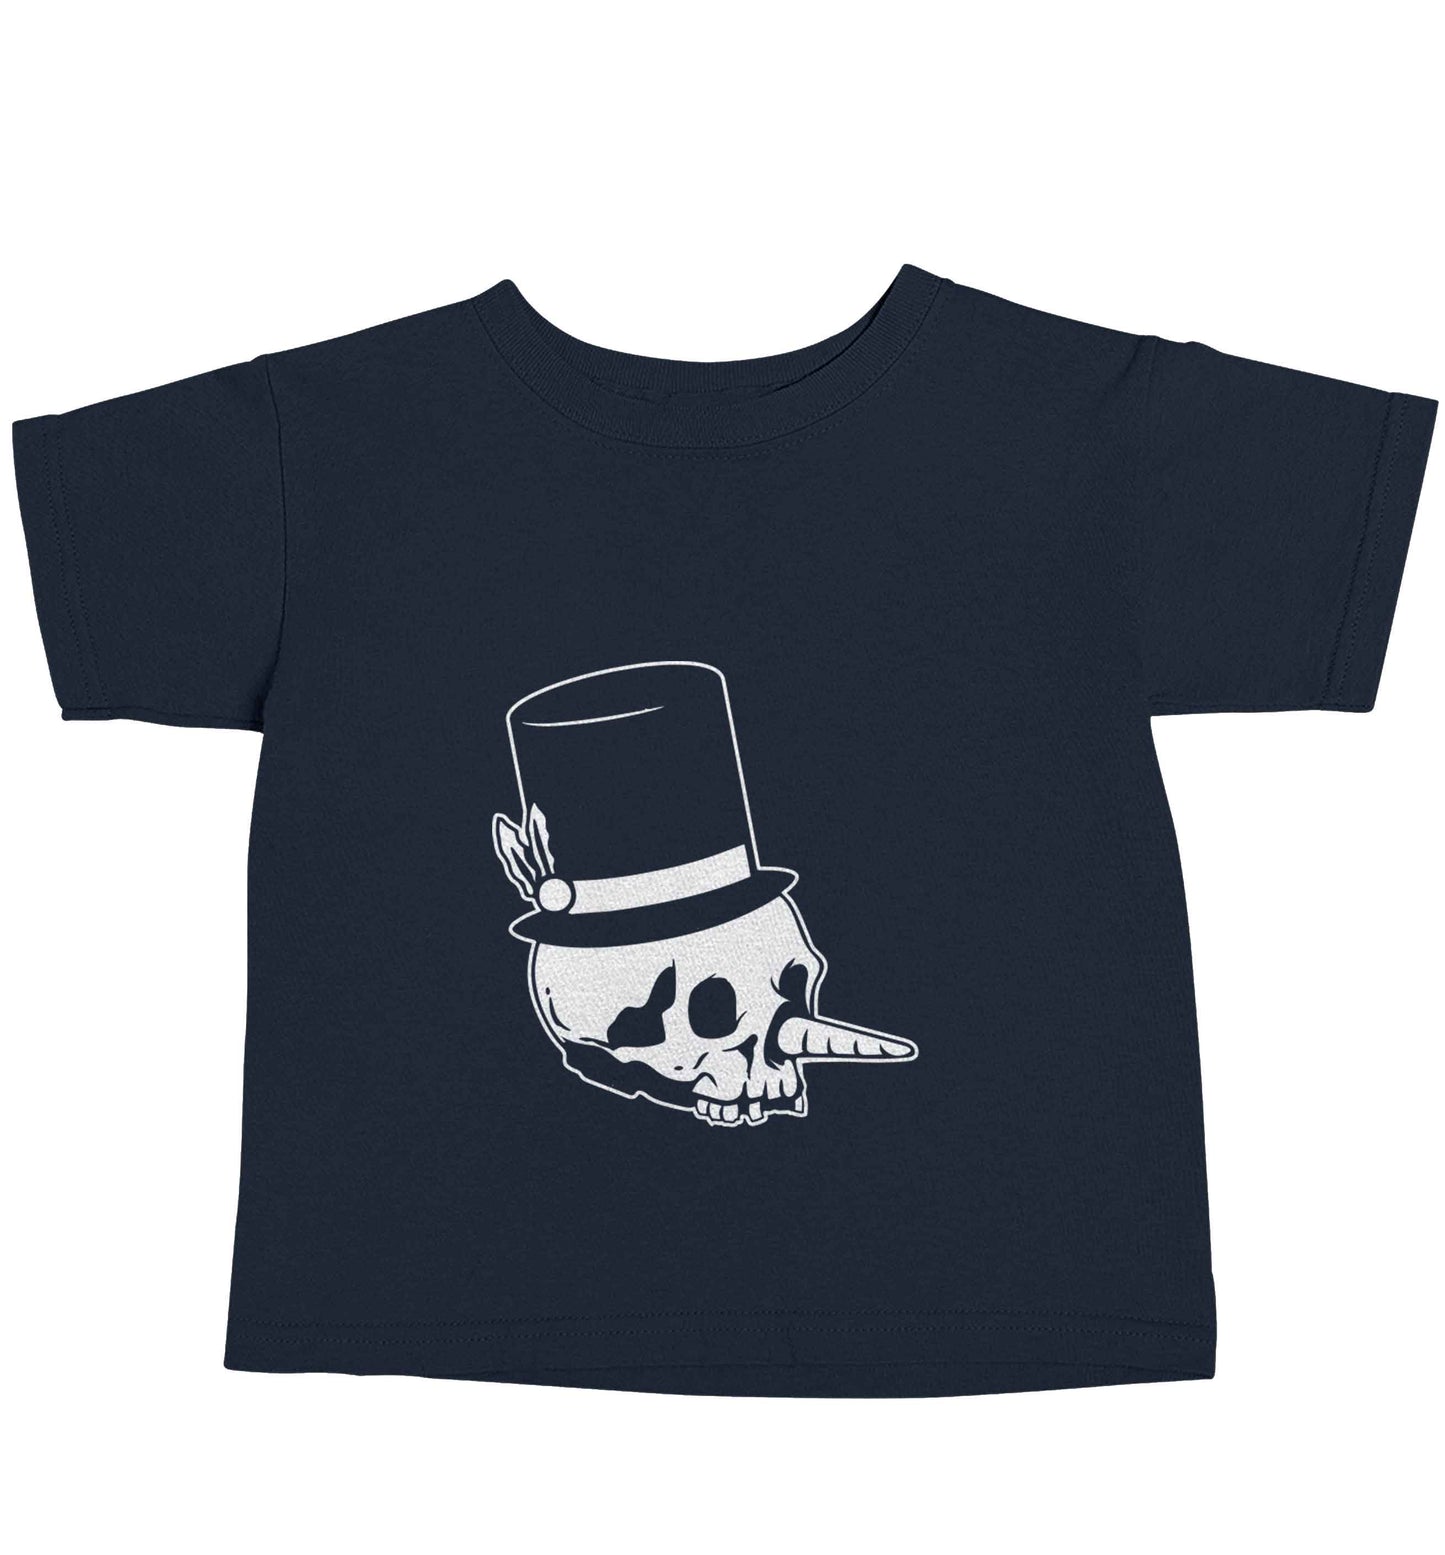 Snowman punk navy baby toddler Tshirt 2 Years